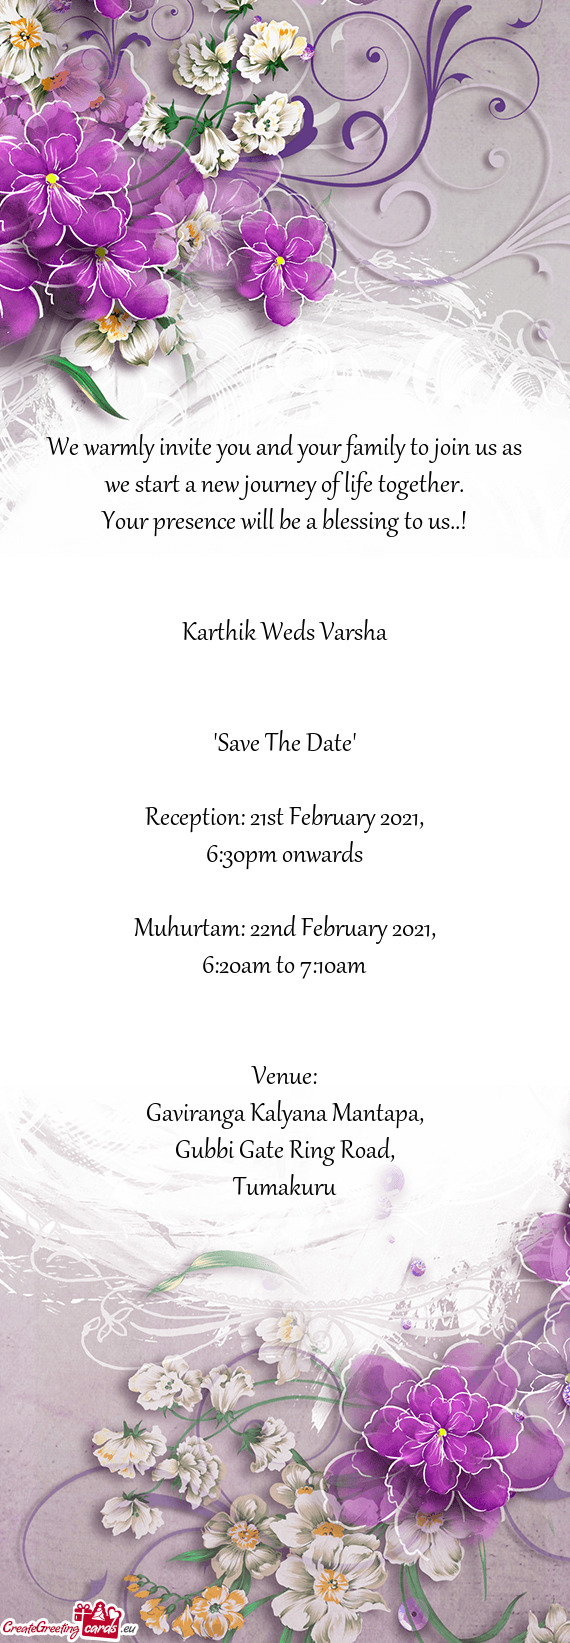 Reception: 21st February 2021